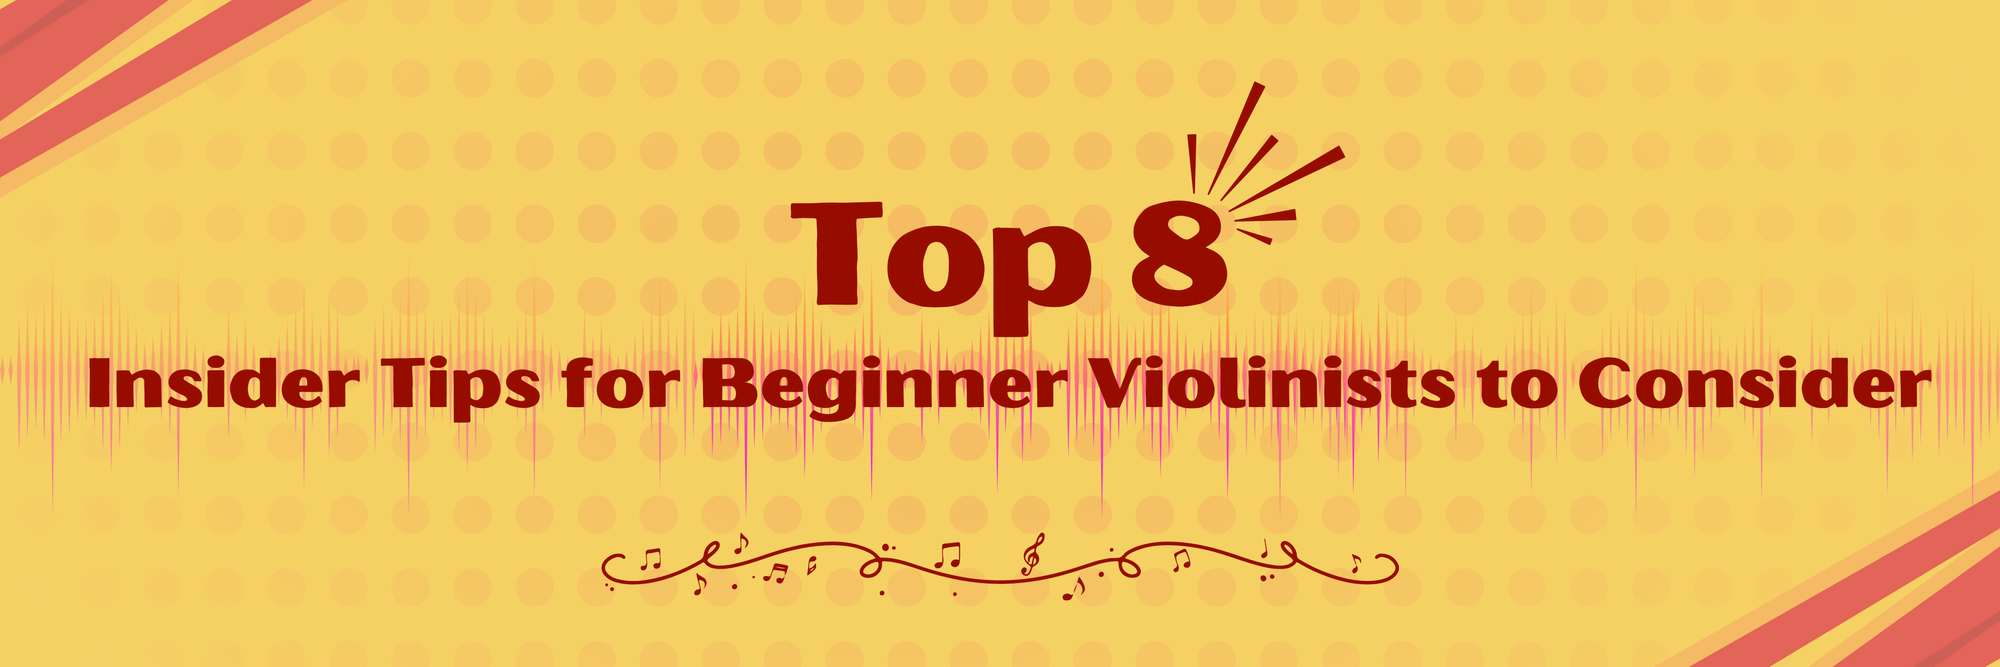 Top 8 Insider Tips for Beginner Violinists to Consider